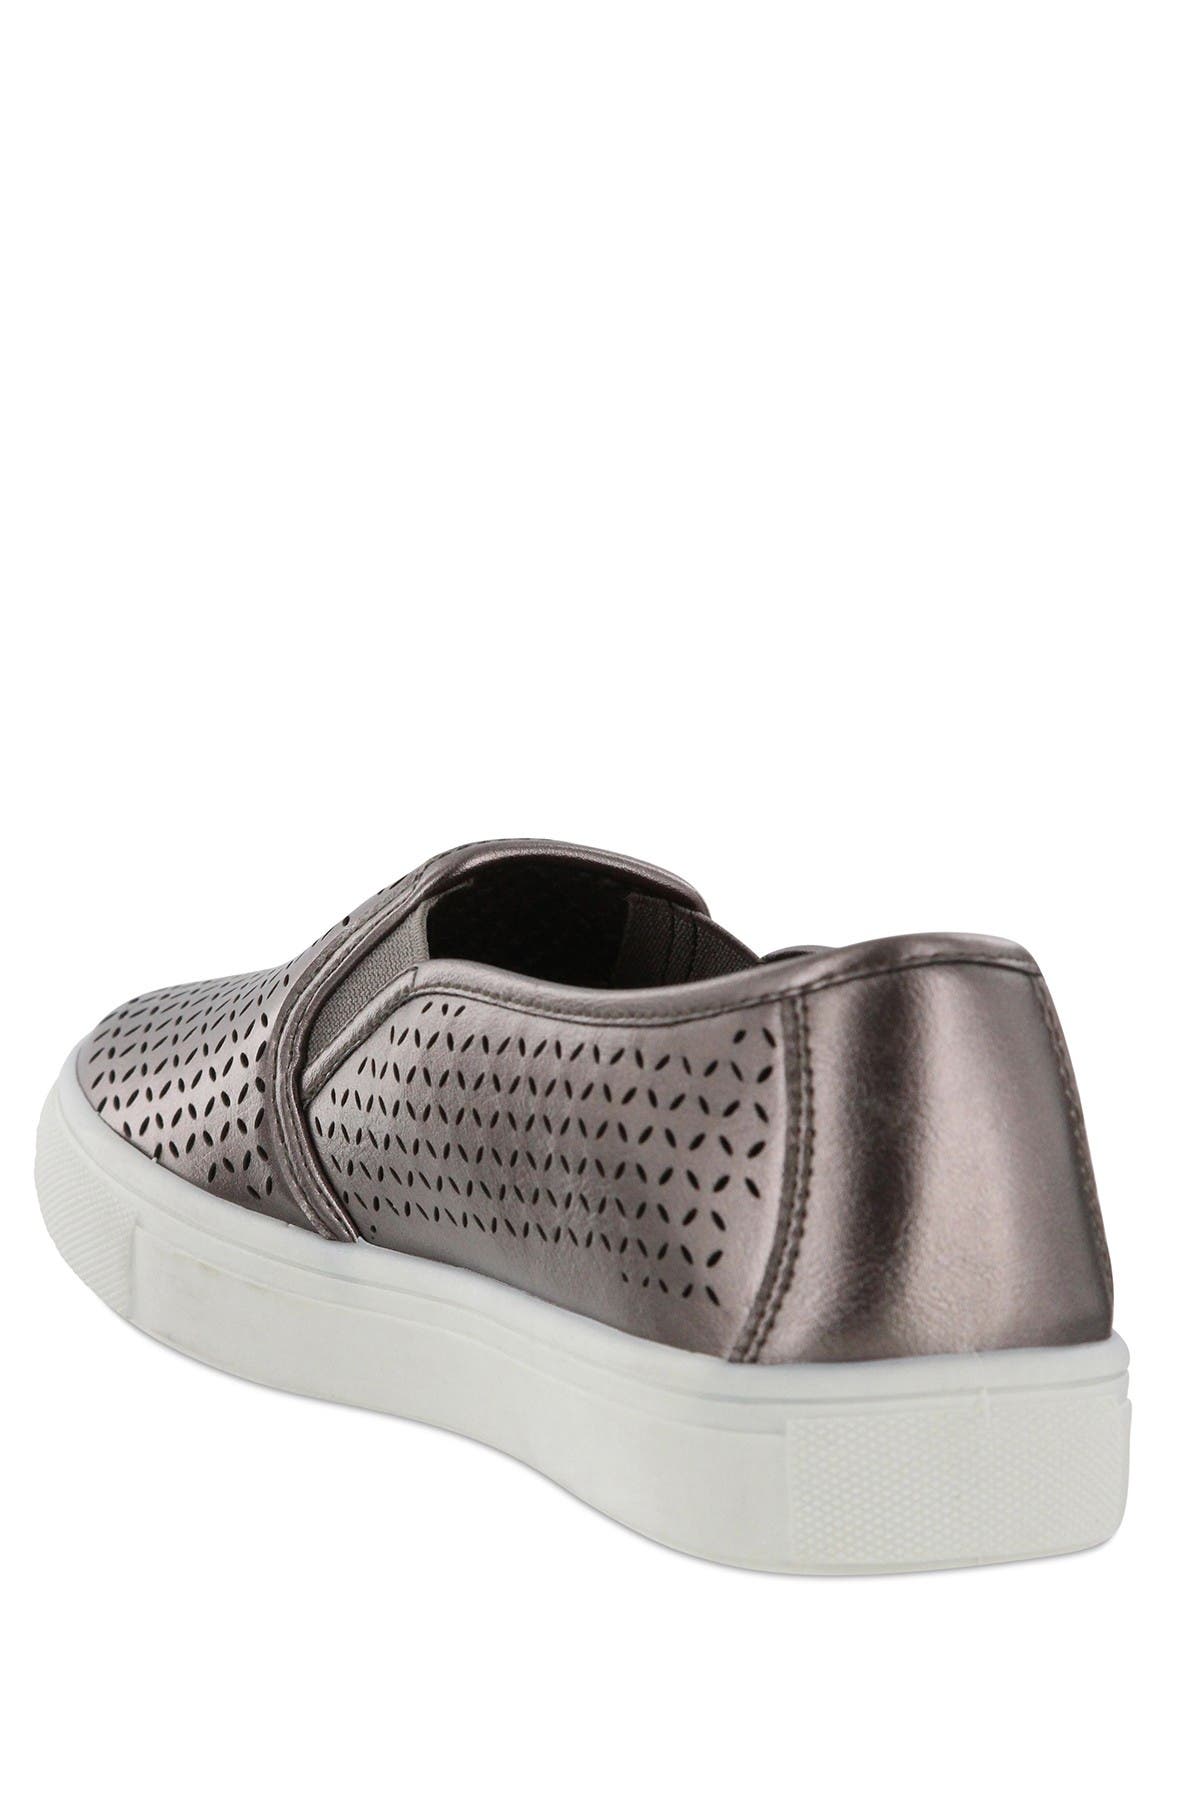 MIA | Edith Perforated Slip-On Sneaker 